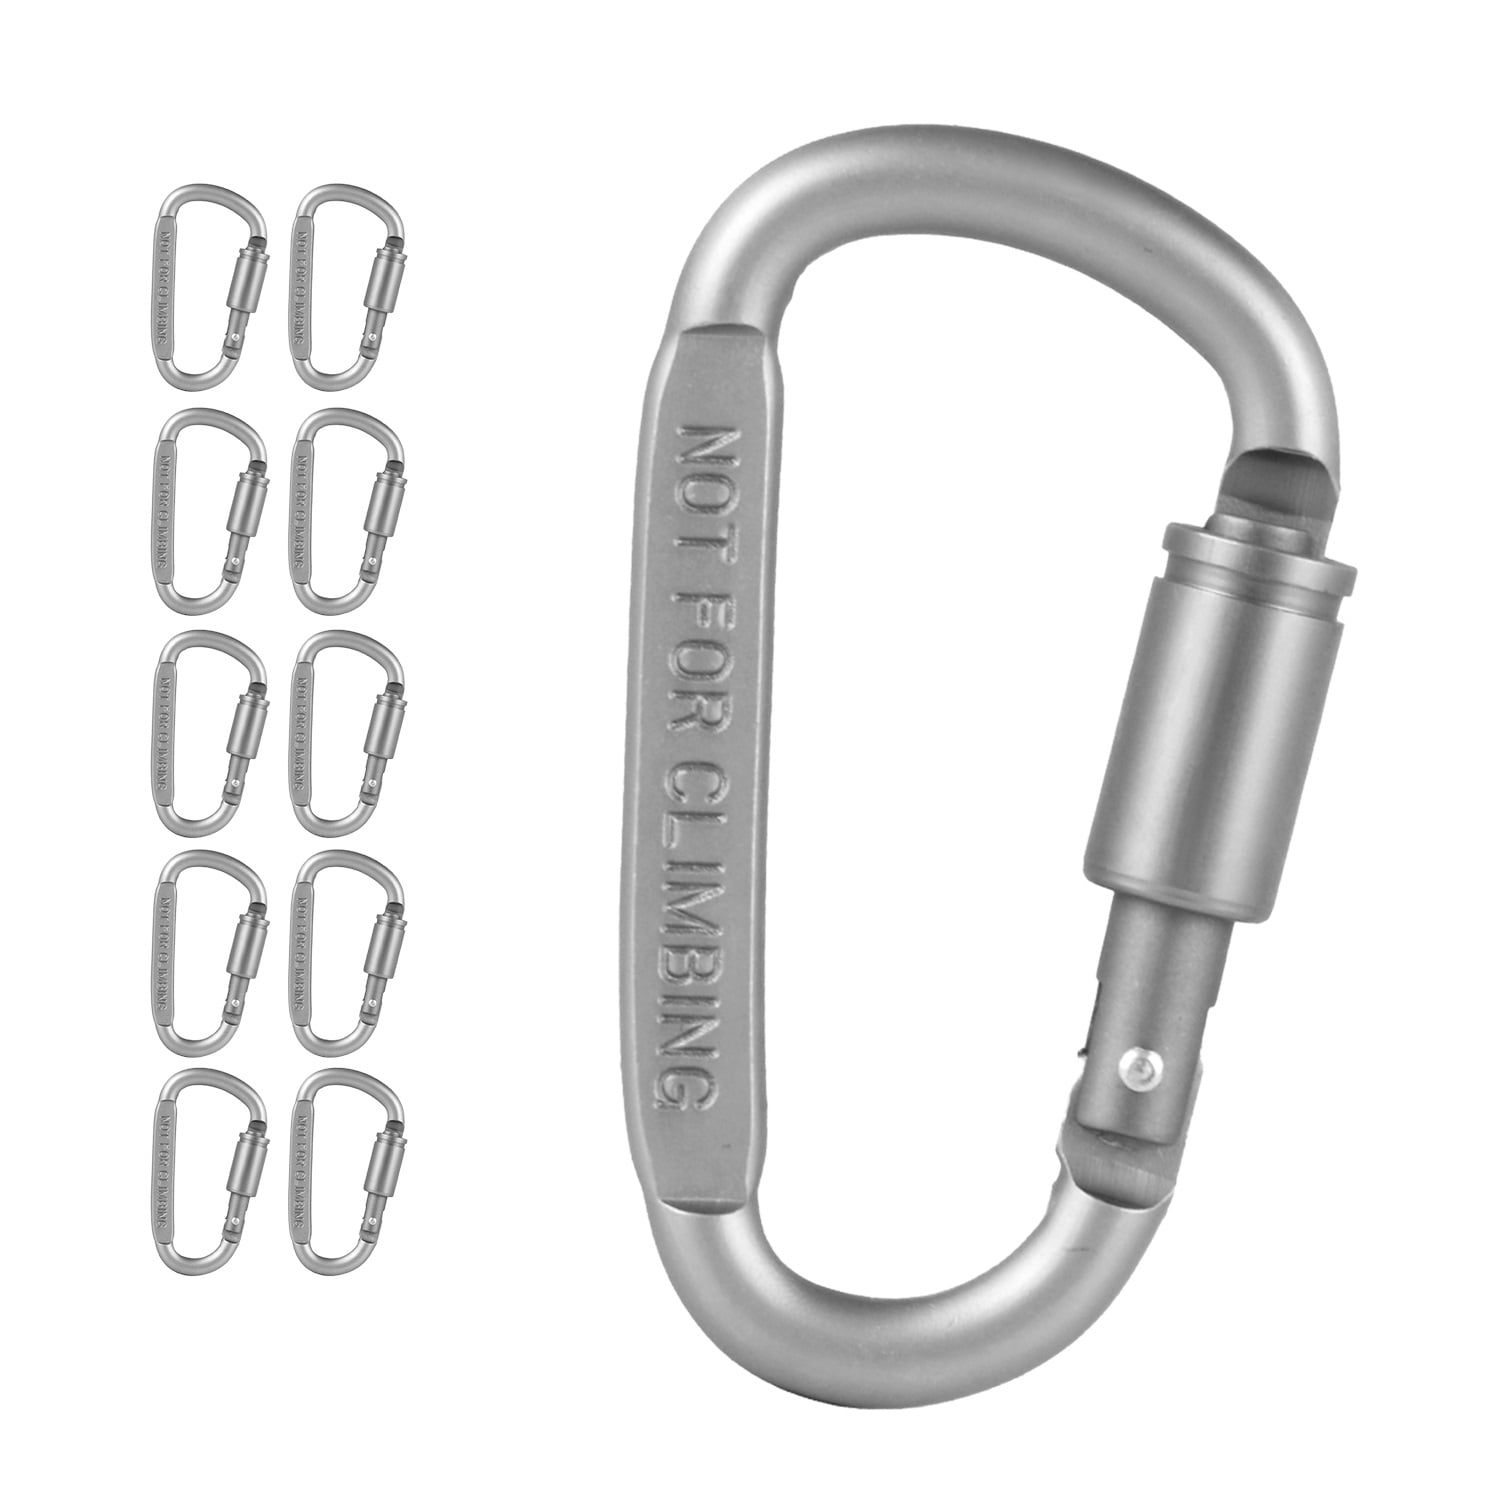 300Pcs/Lot 8cm Aluminum Carabiner D-Ring Key Chain Clip Camping